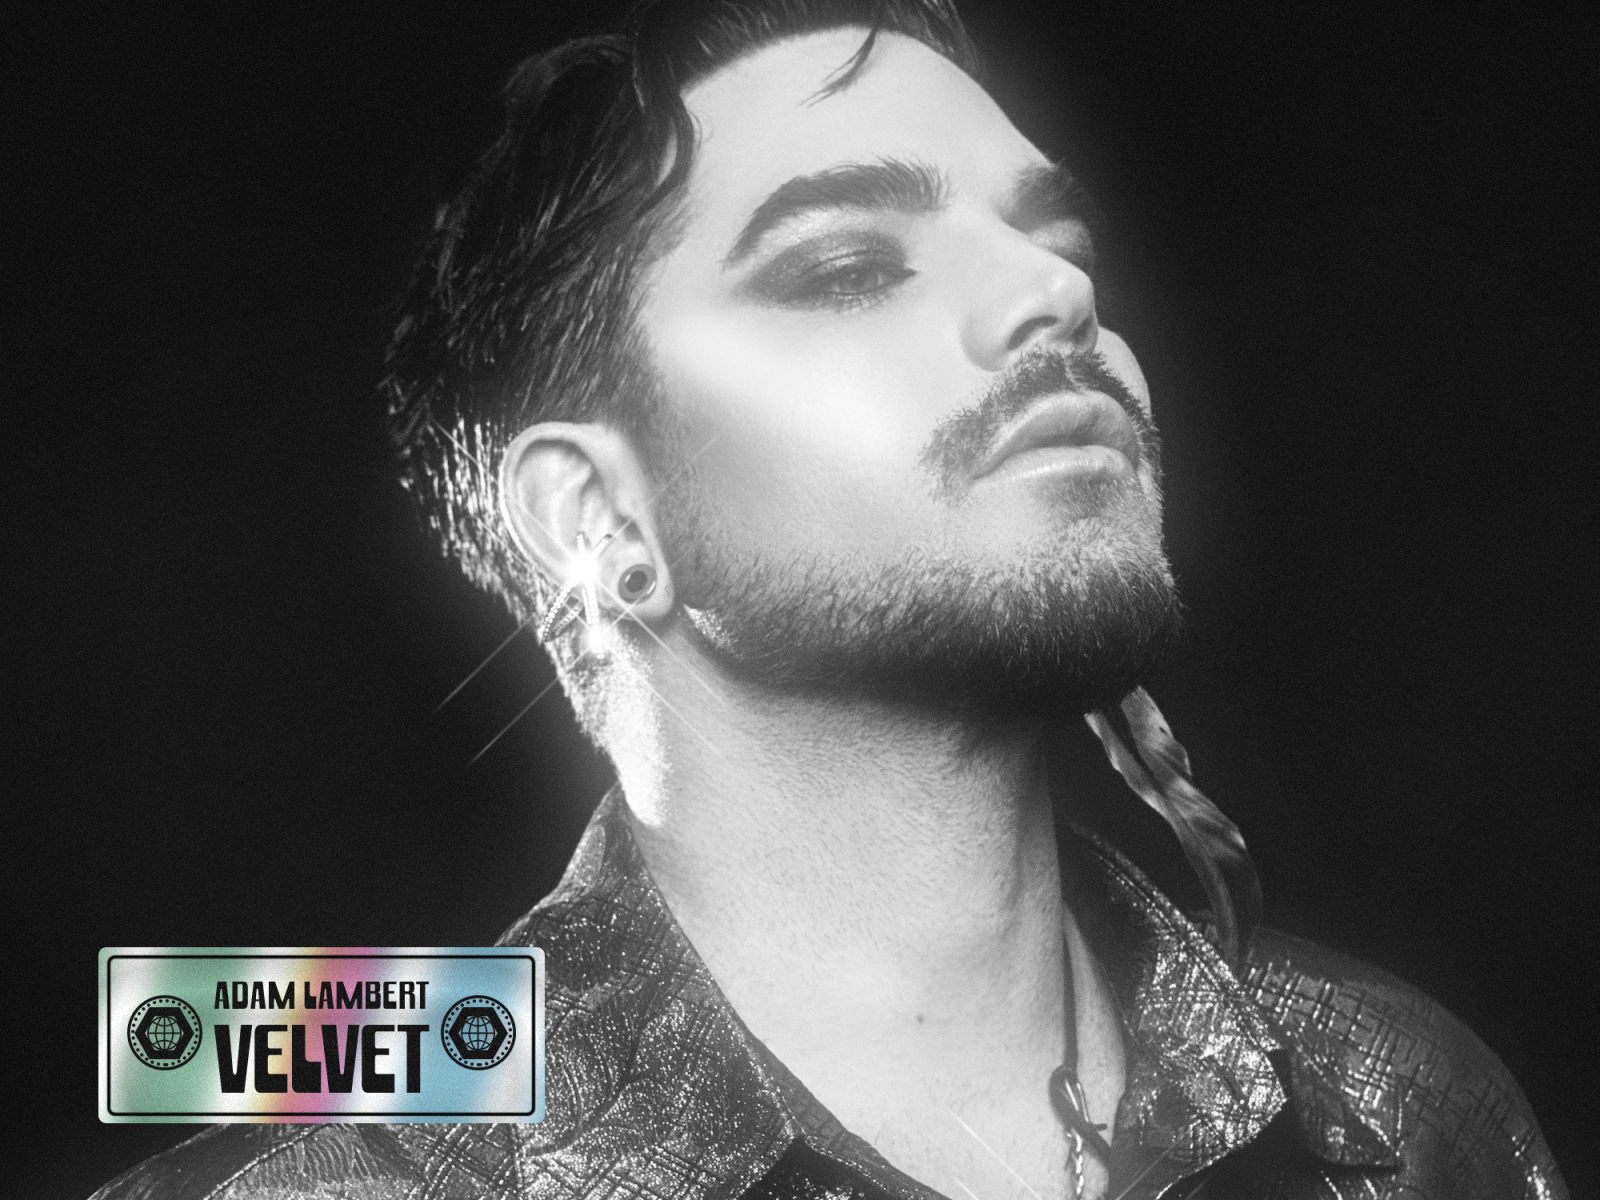 Adam Lambert - Velvet (Album Art - Version 1) by Filip Manojlovic on ...